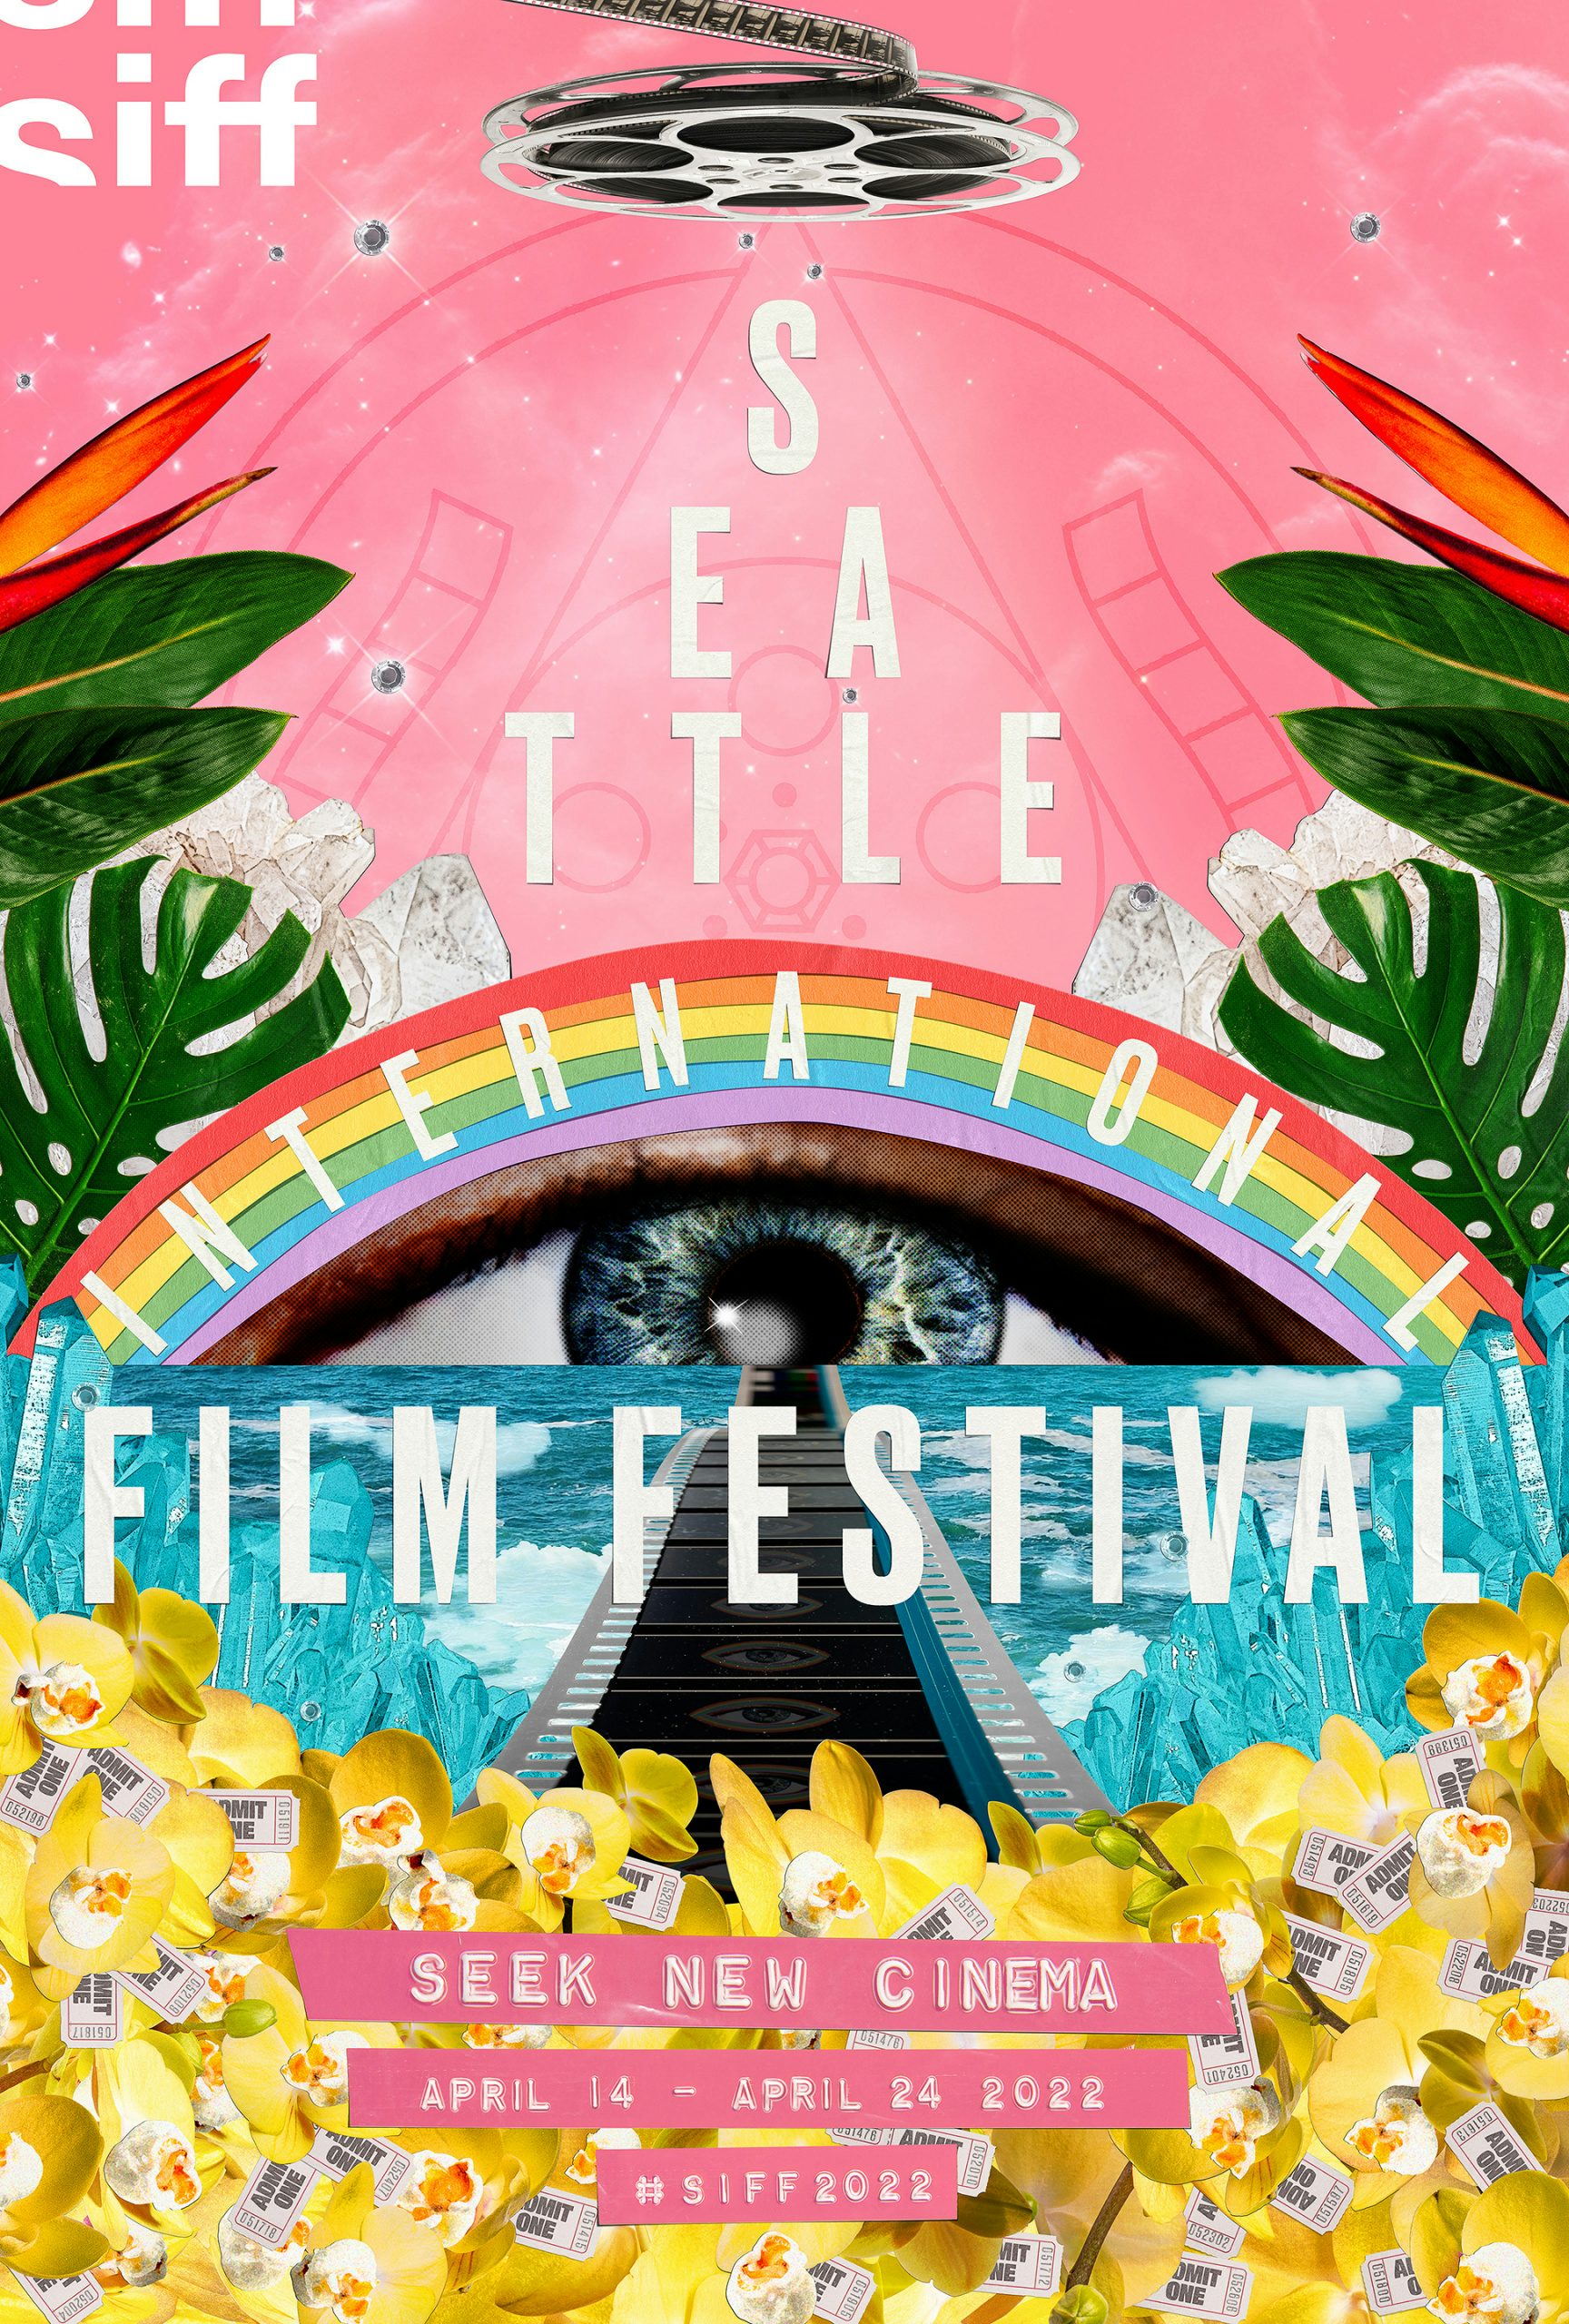 The cultinspired designs for Seattle International Film Festival